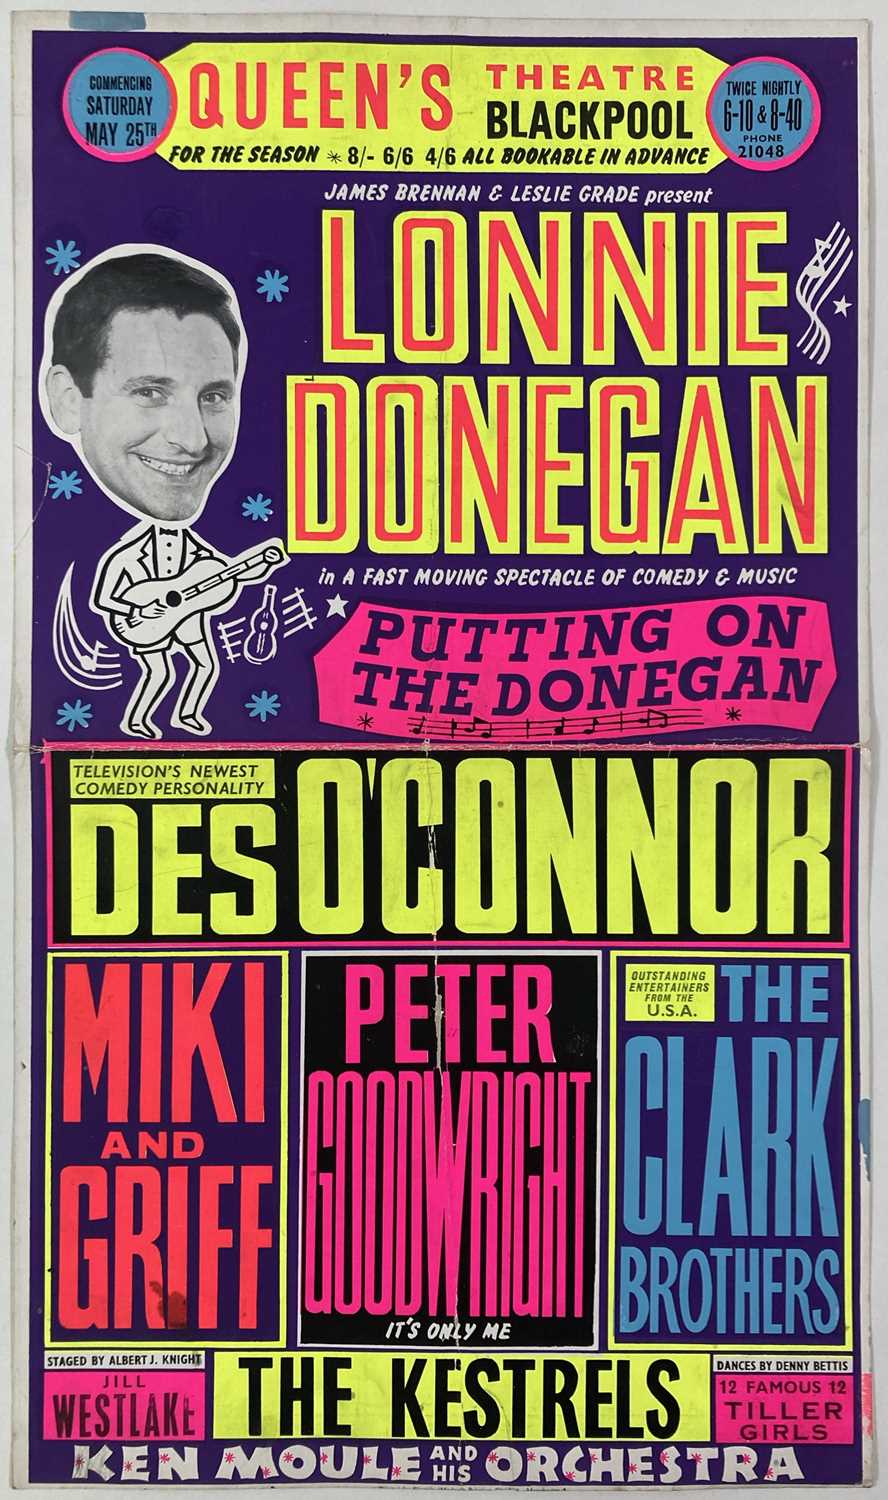 Lot 210 - LONNIE DONEGAN / DES O'CONNOR - AN ORIGINAL 1963 POSTER.